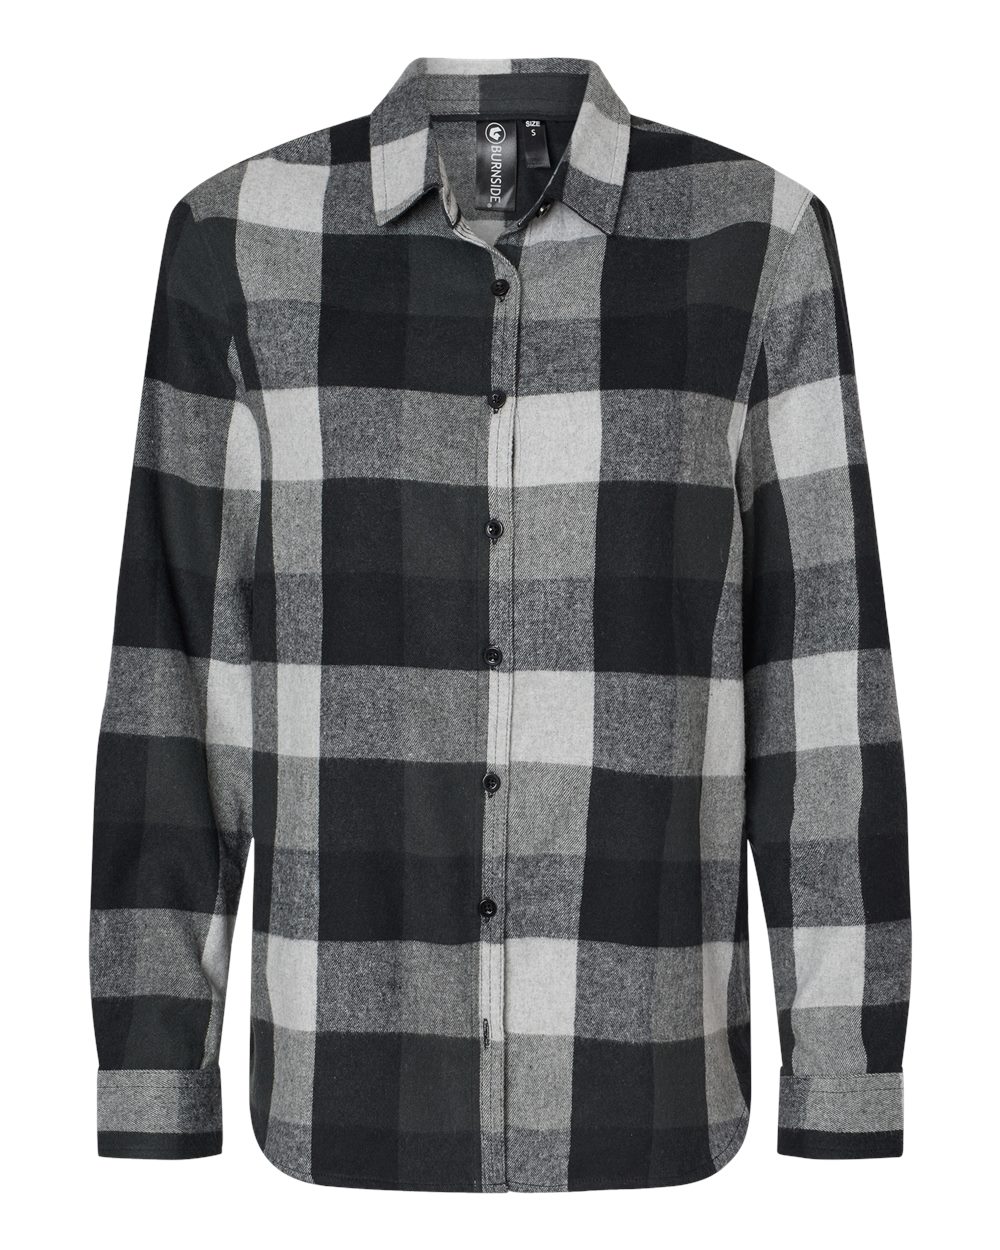 Burnside 5215 - Women's Boyfriend Flannel Shirt